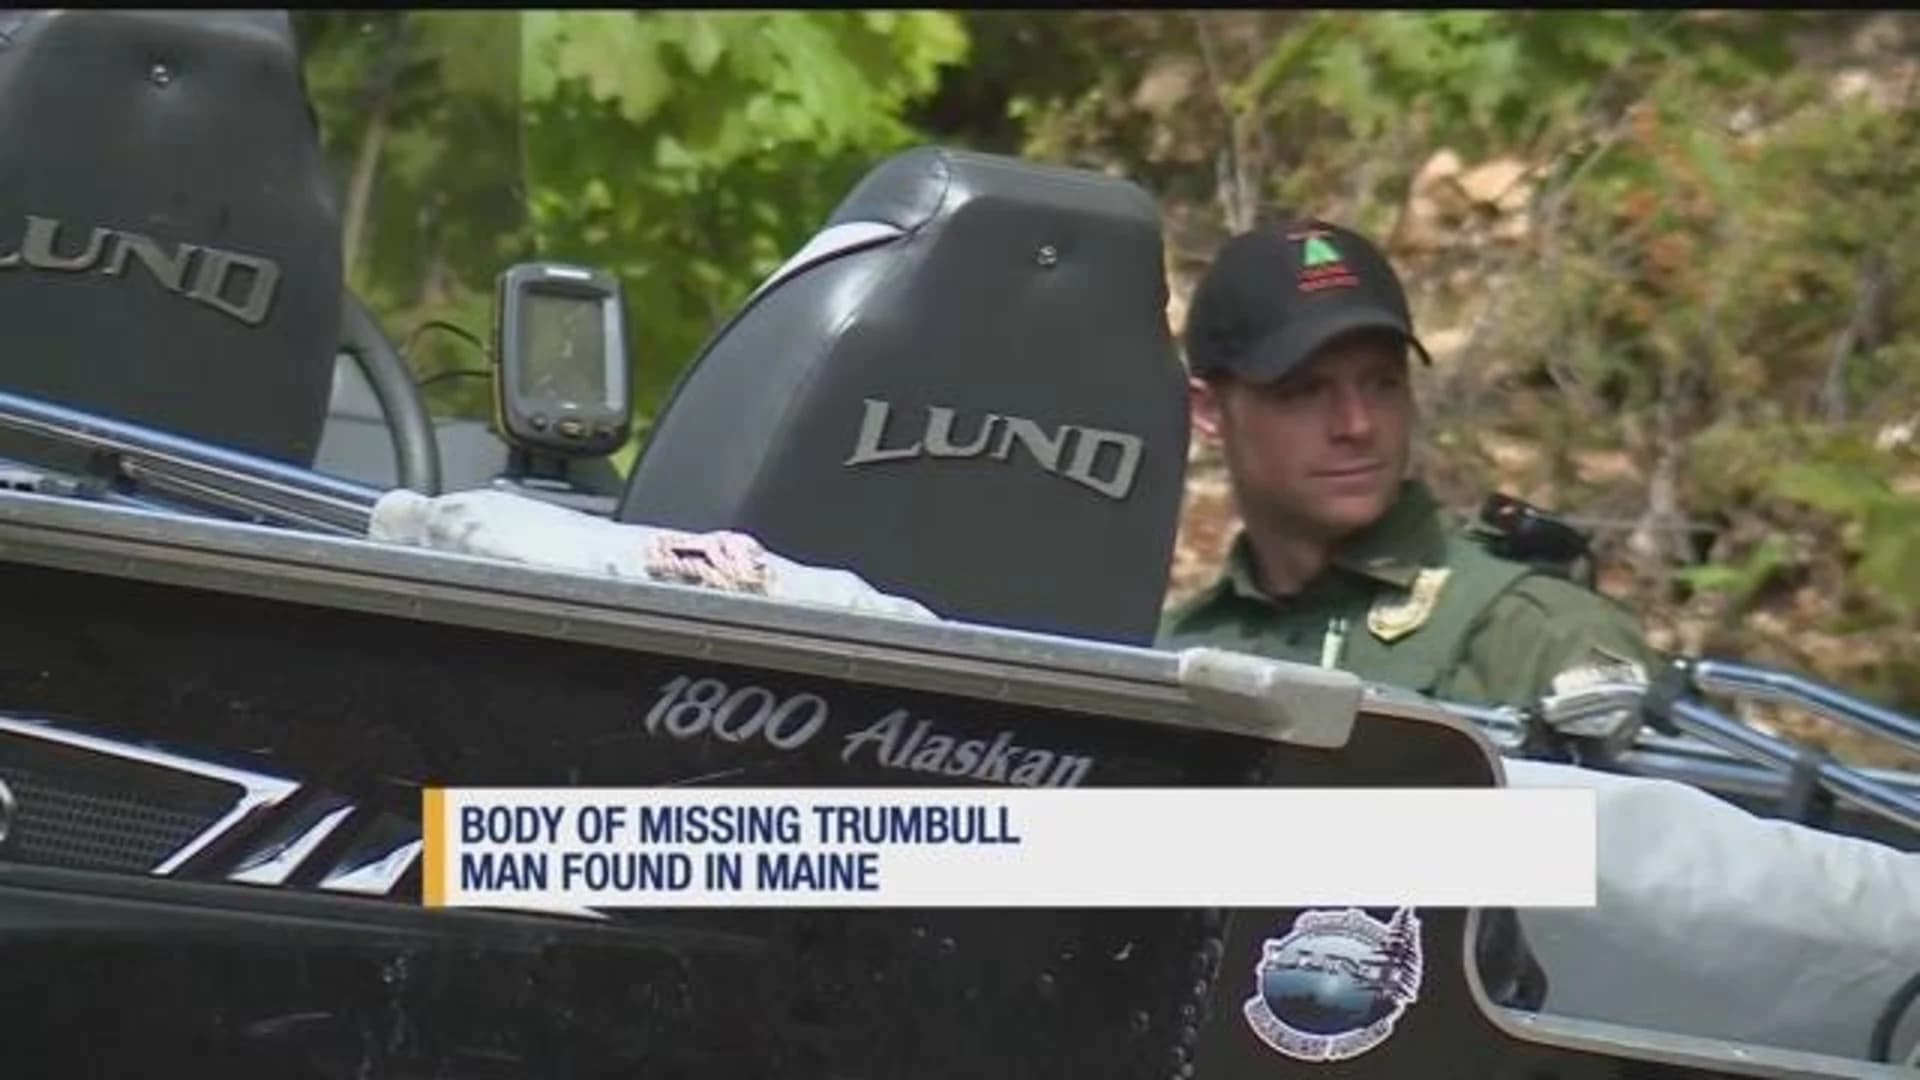 Trumbull man dies in canoe accident in Maine